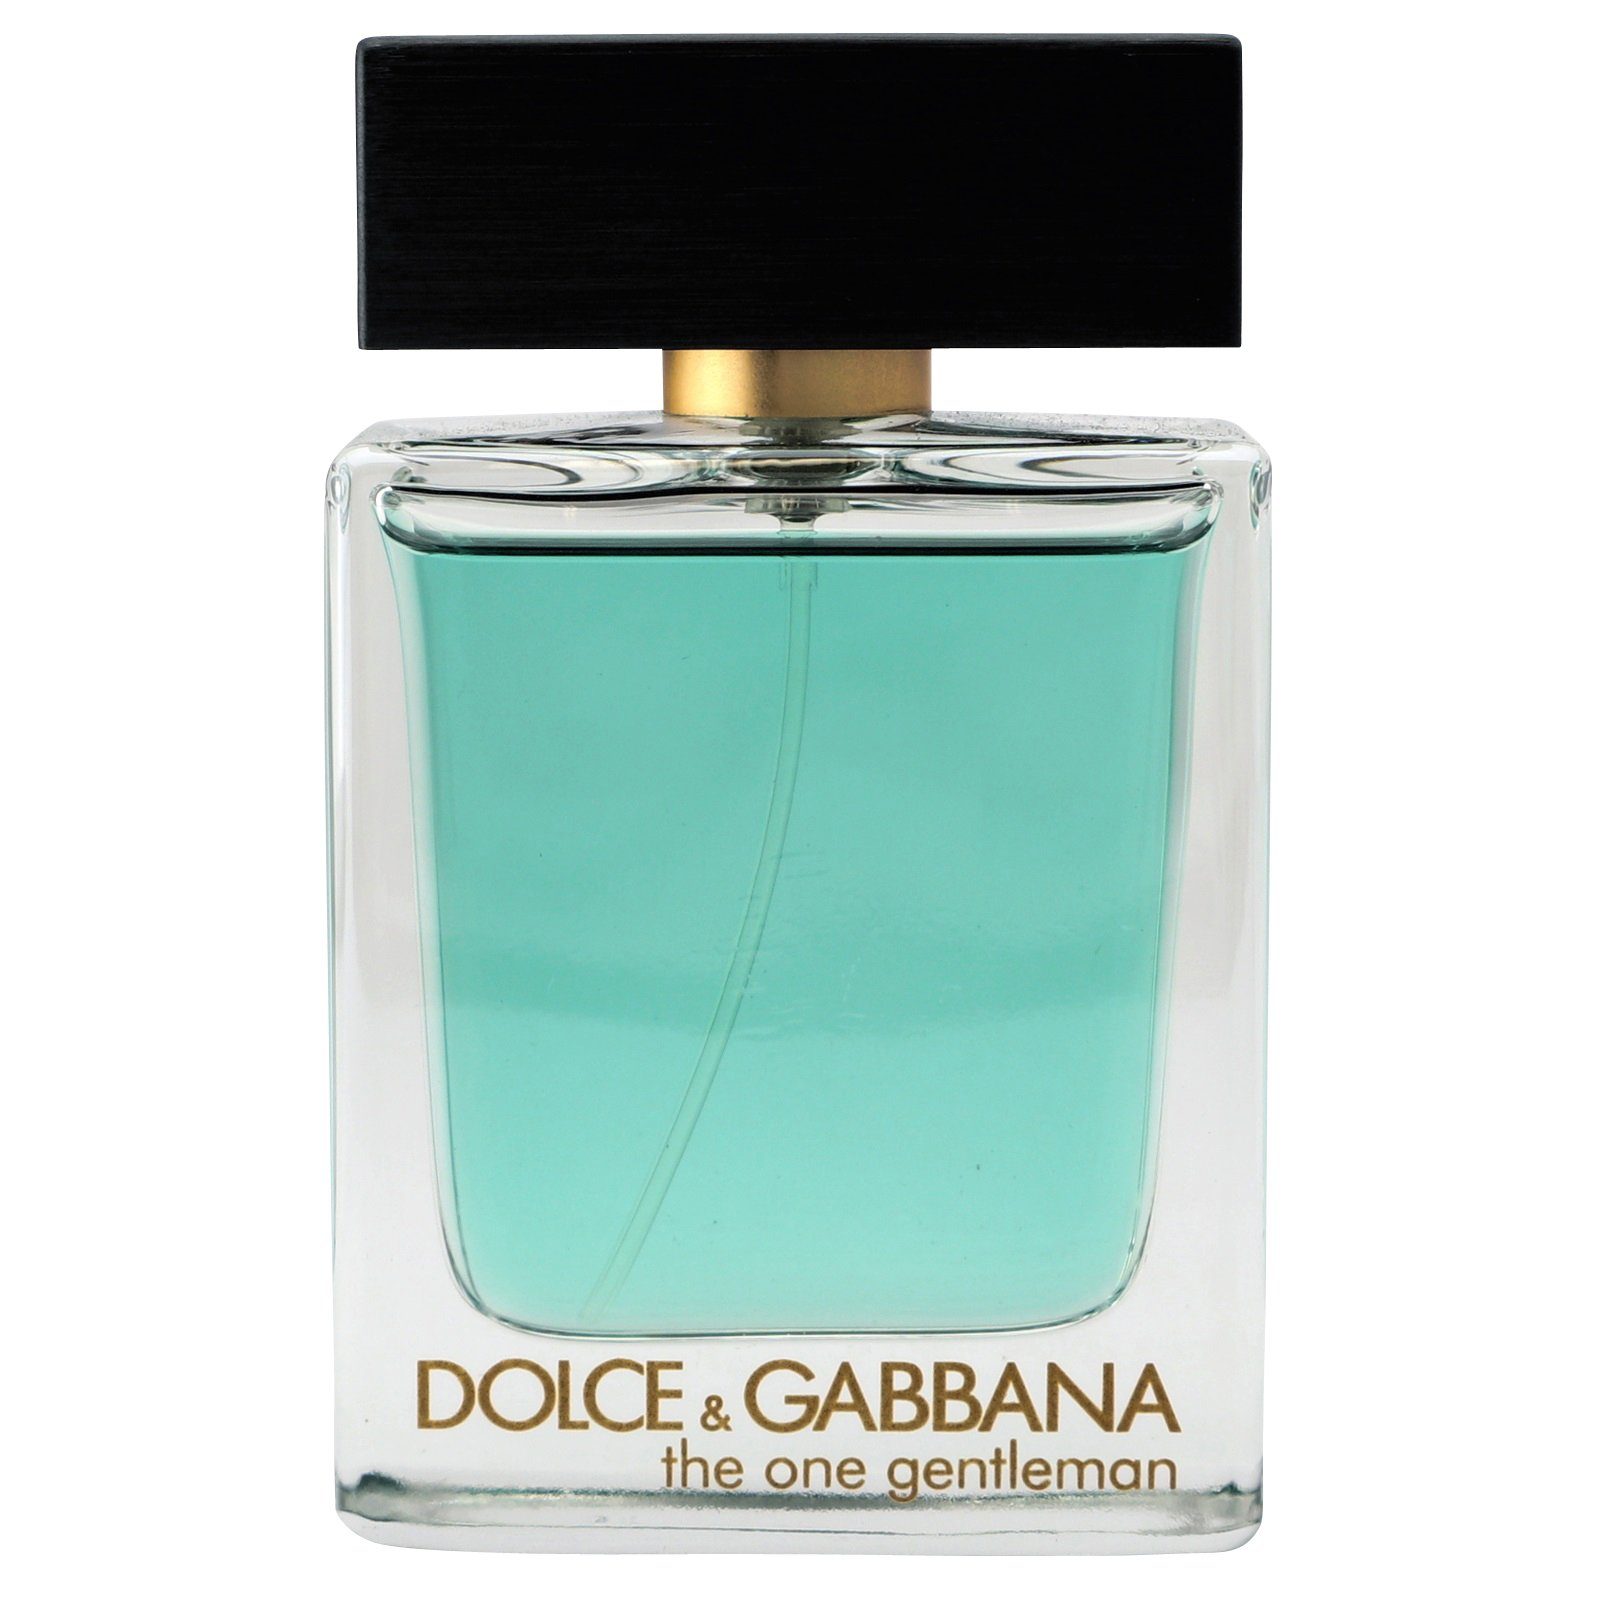 Dolce One & ml Eau Gabbana Toilette GABBANA de de & The 50 Toilette Spray Eau DOLCE Gentleman